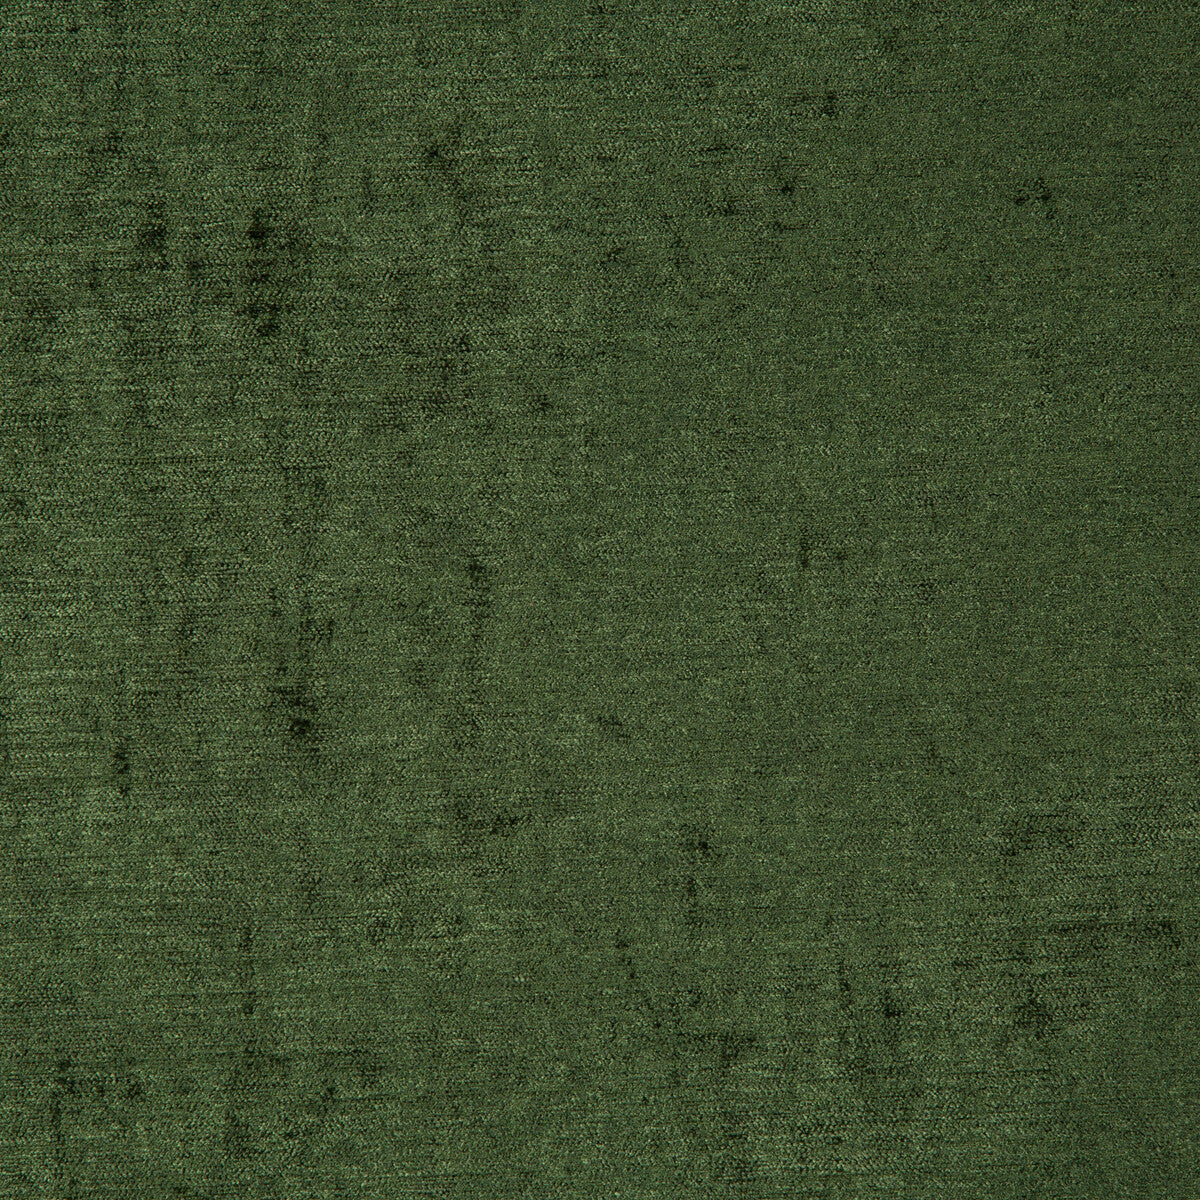 Kravet Smart fabric in 35926-30 color - pattern 35926.30.0 - by Kravet Smart in the Performance Kravetarmor collection